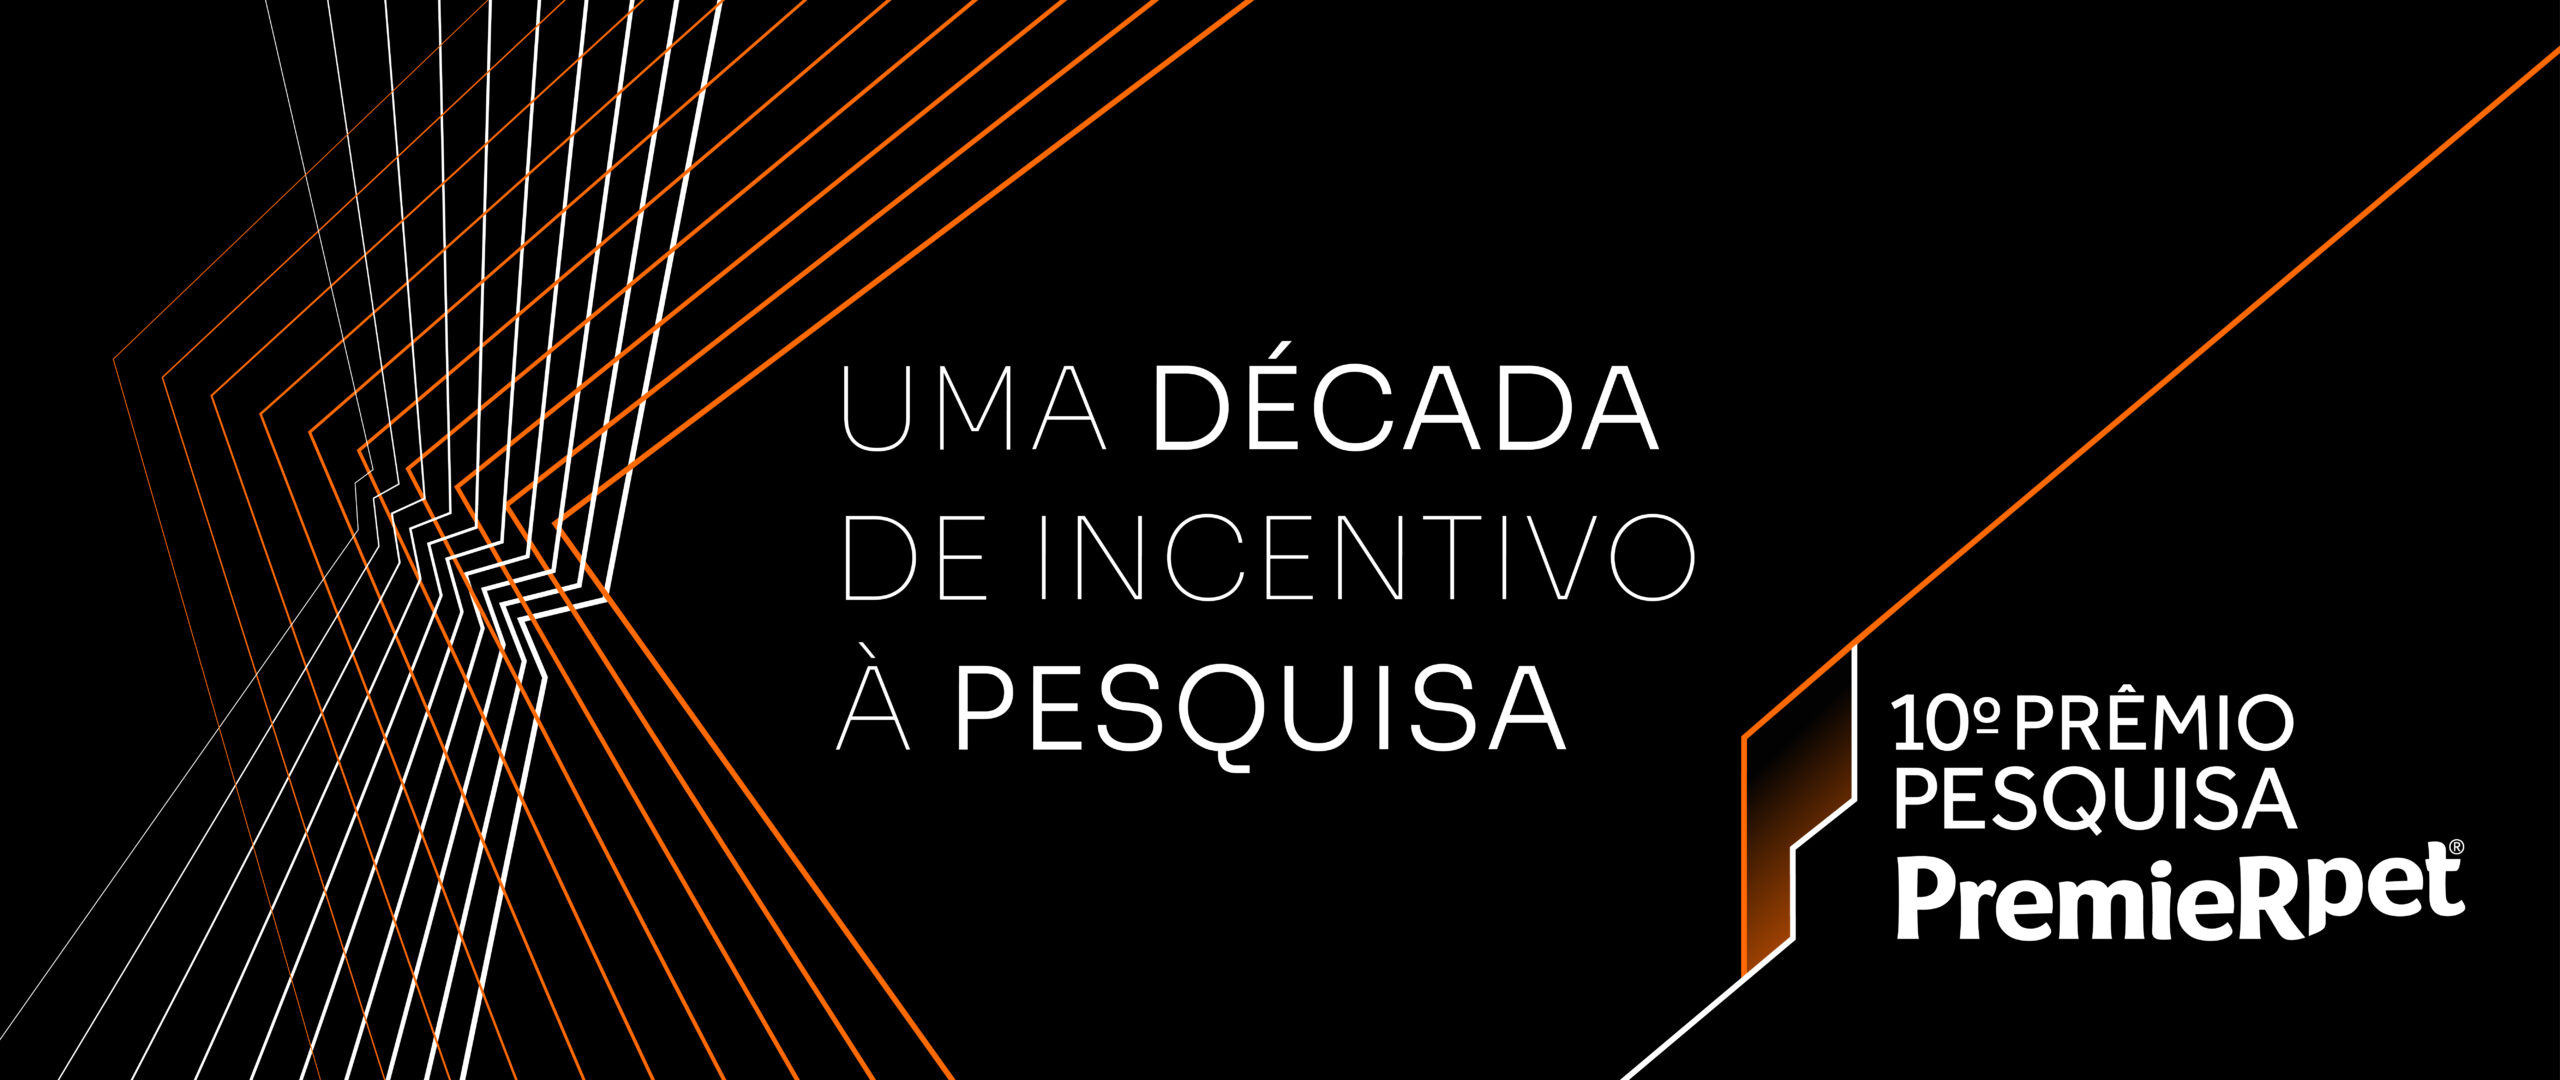 Banner do 10° Prêmio de Pesquisa PremieRpet